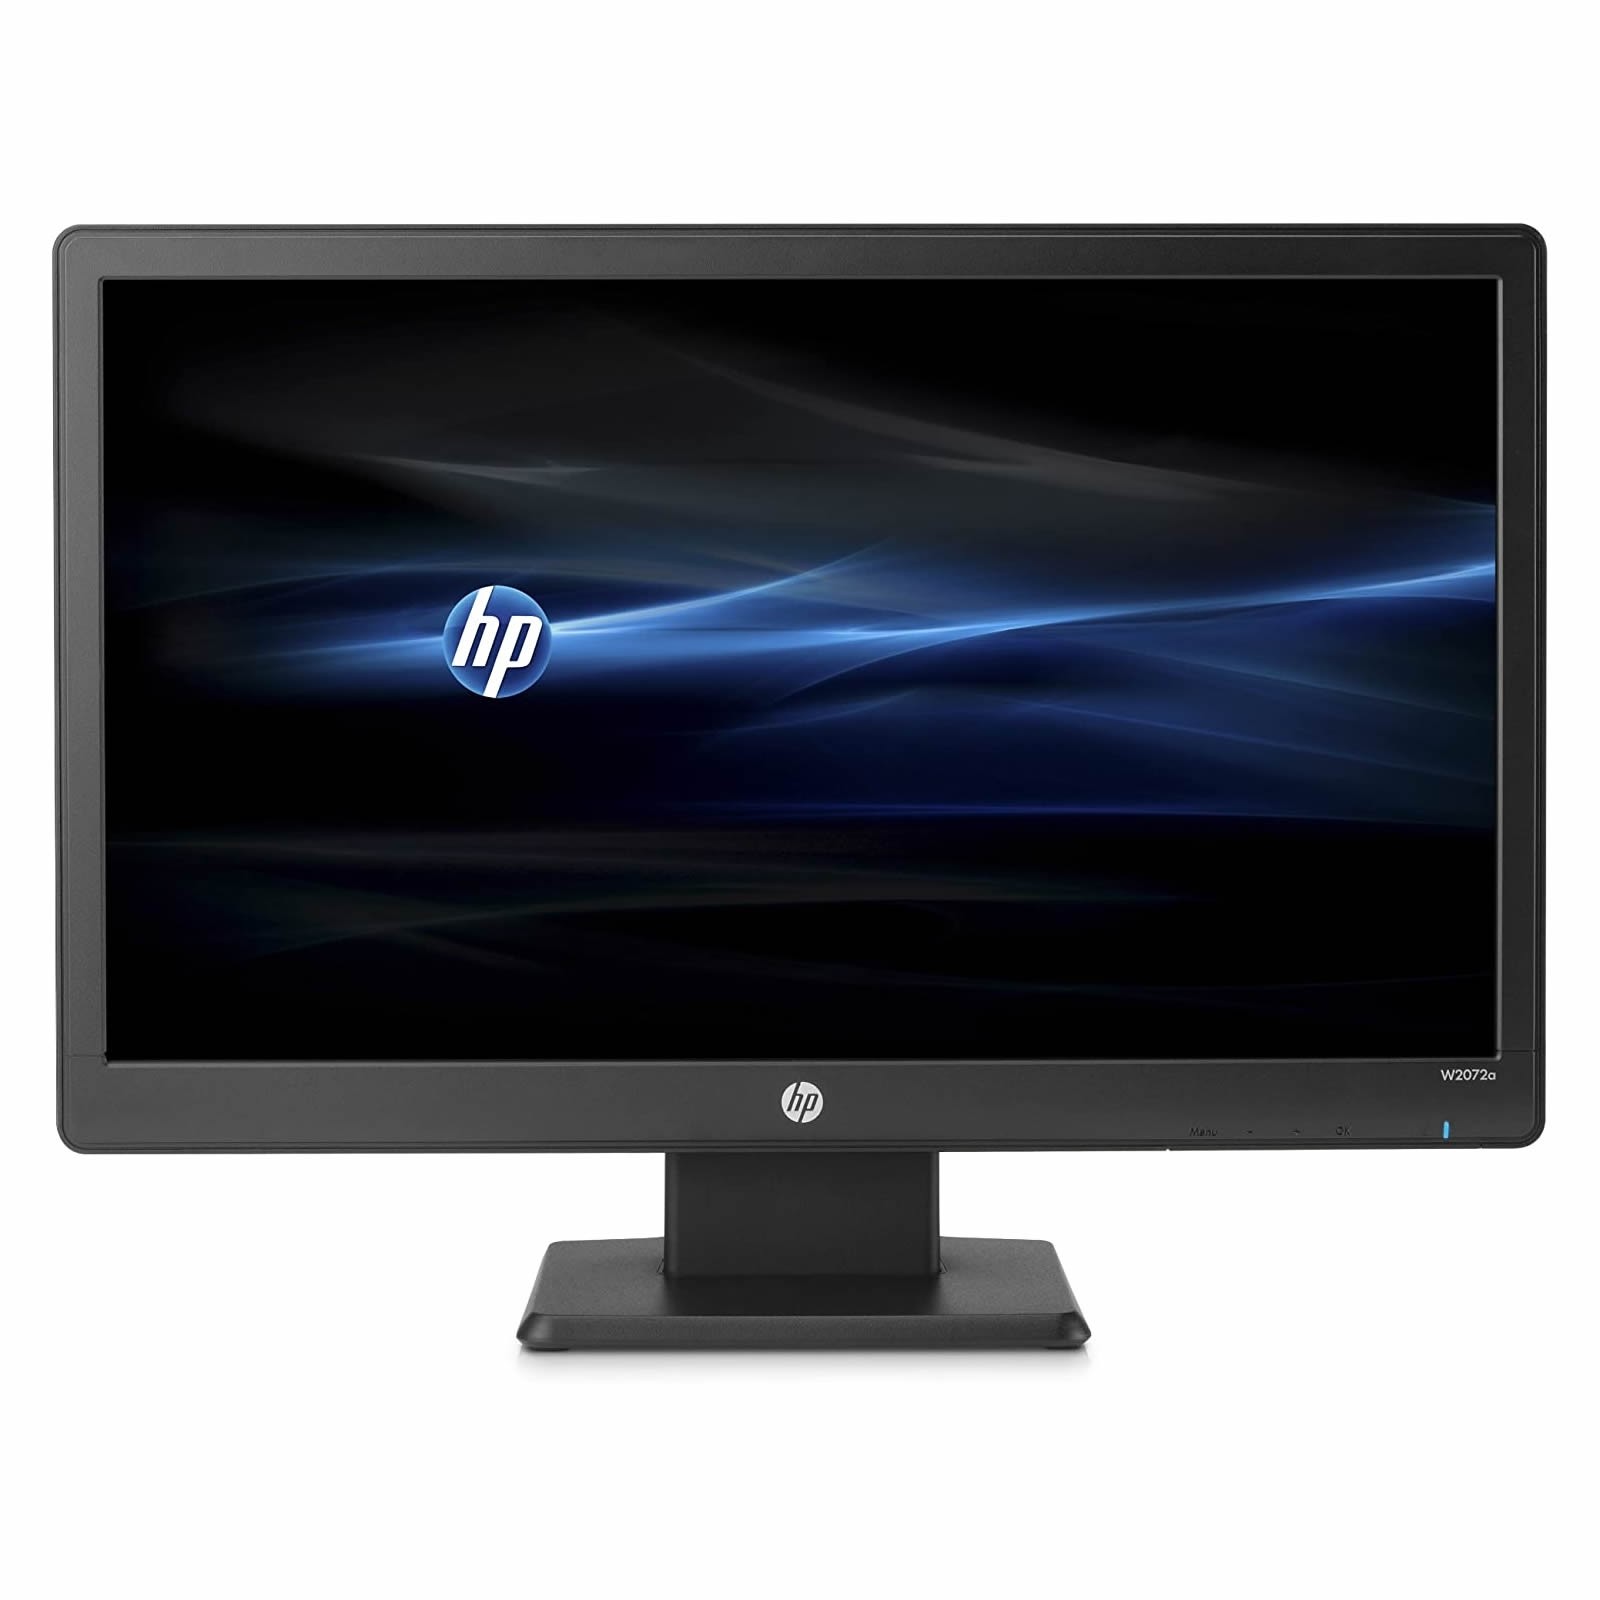 HP W2072a Black 20" LED Backlit LCD Monitor